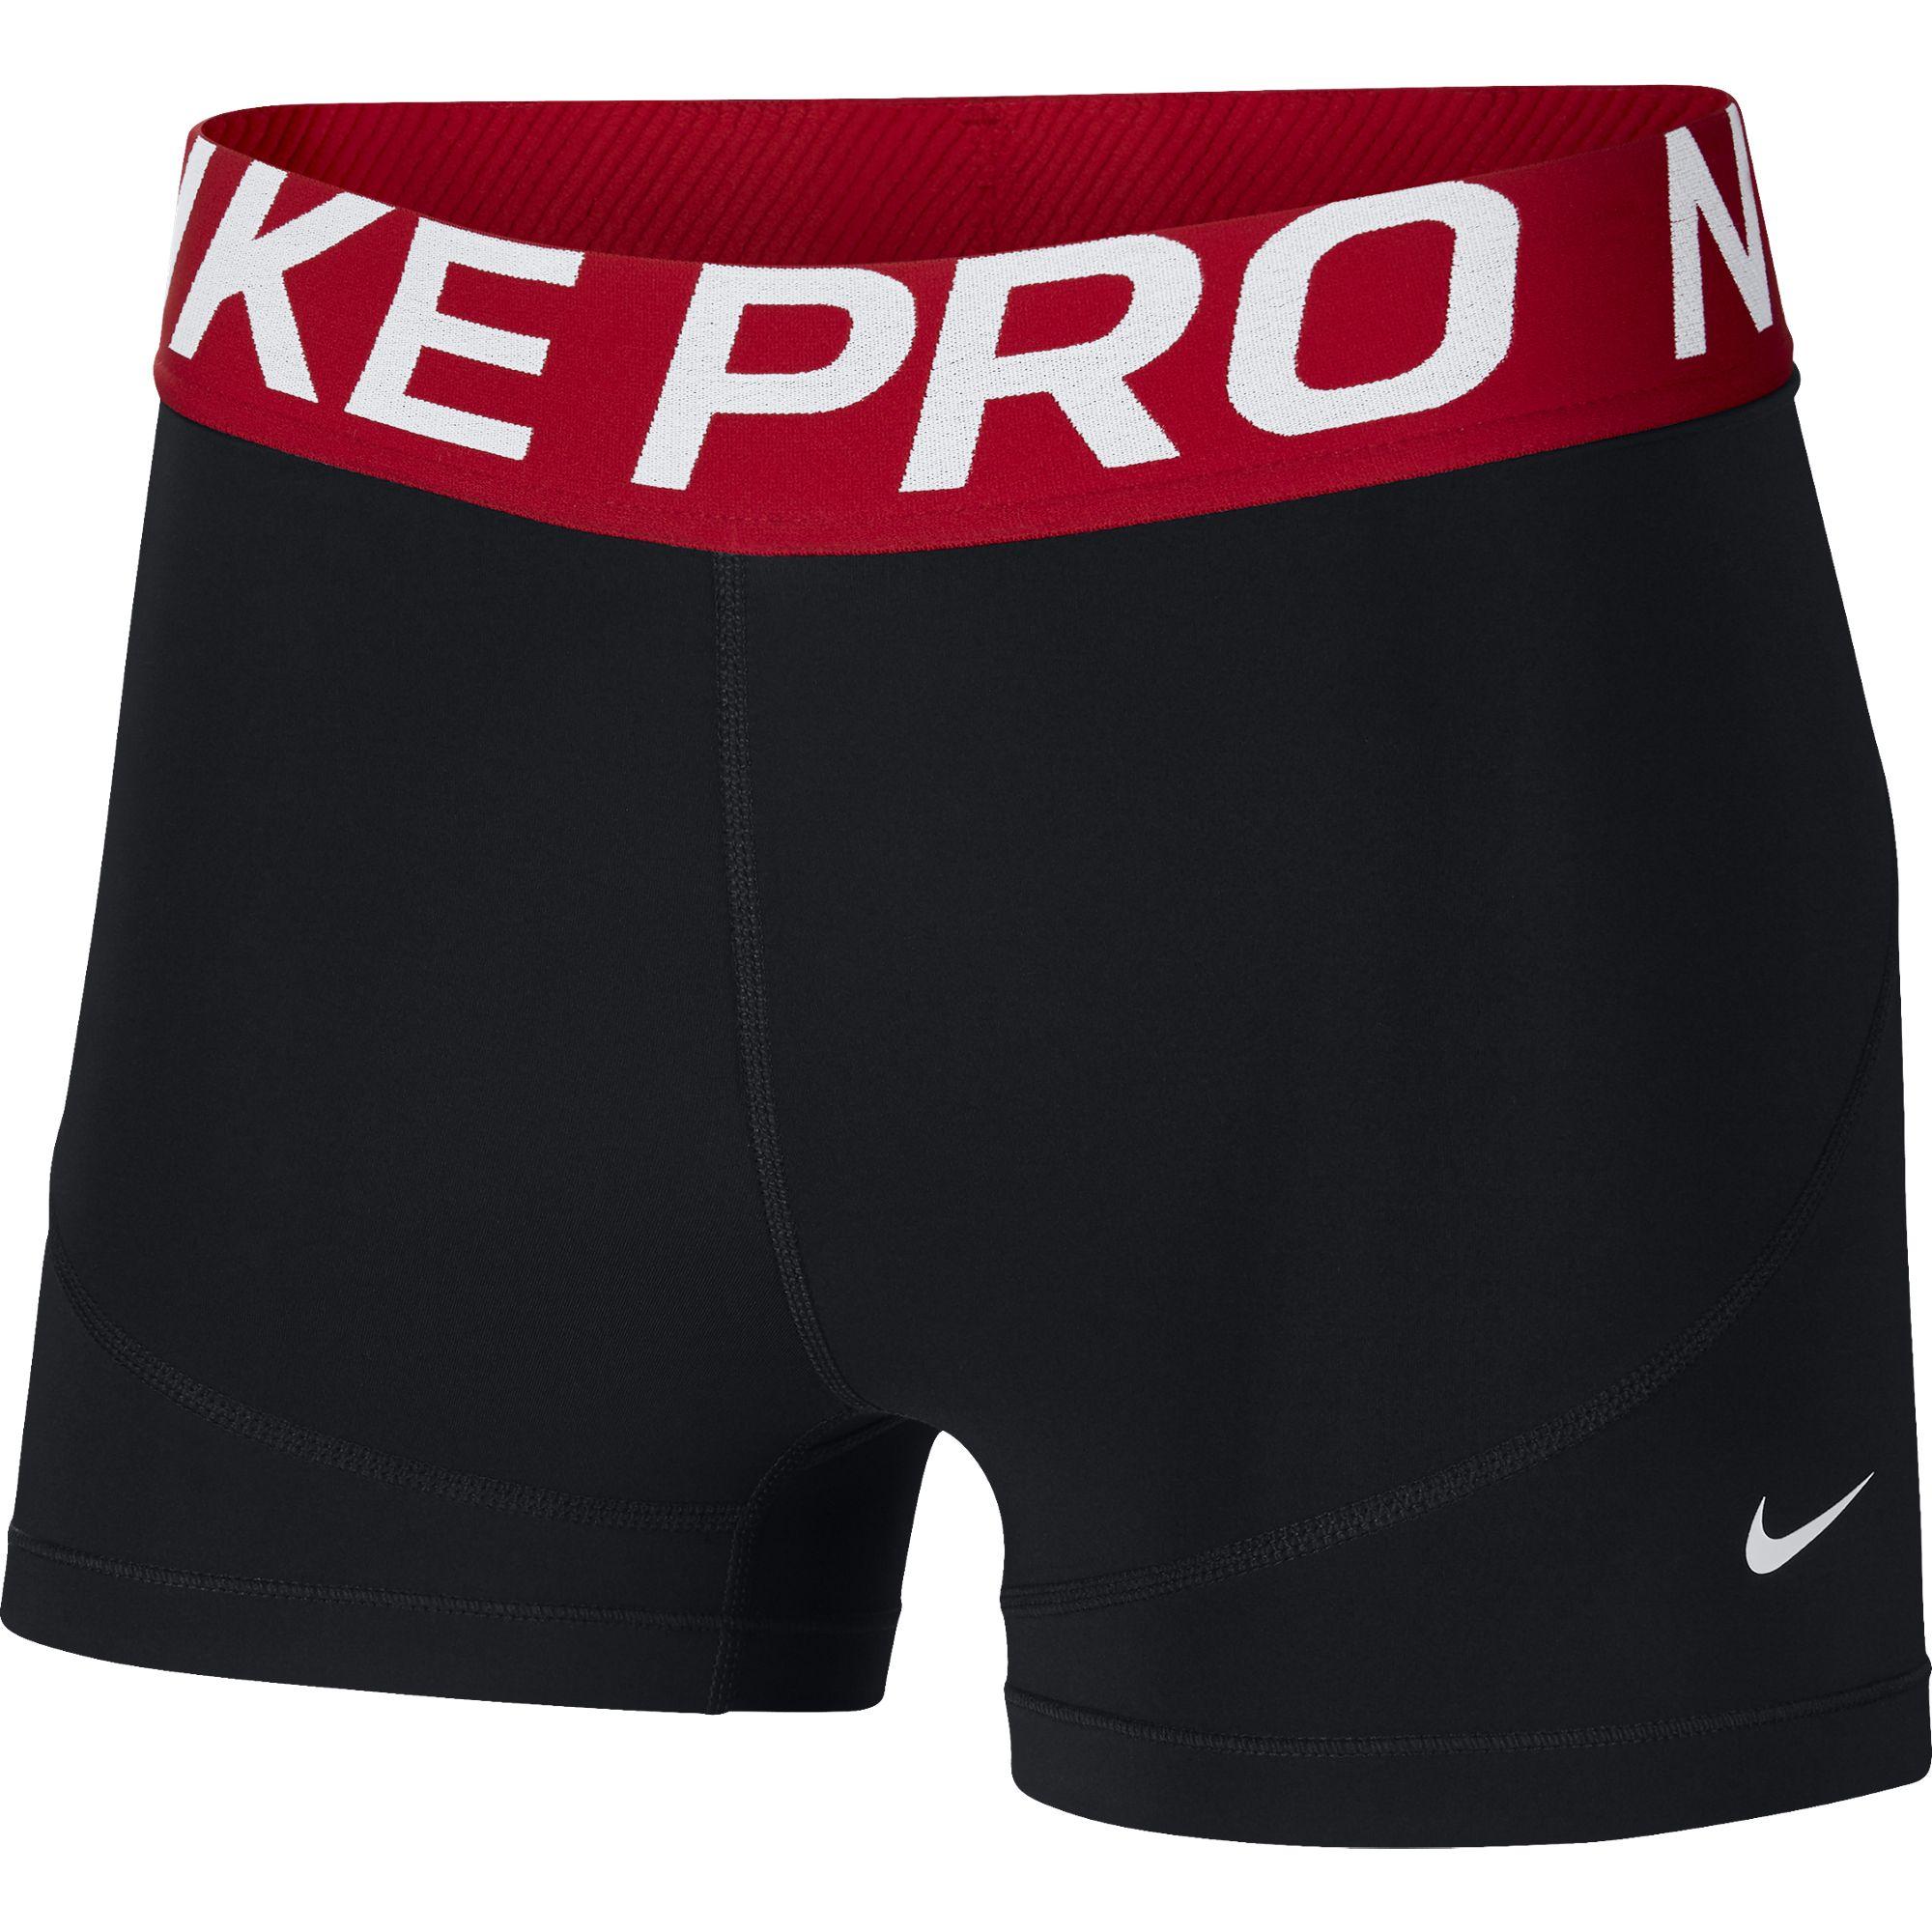 Nike Womens Pro 3 Inch Shorts - Black/Gym Red - Tennisnuts.com